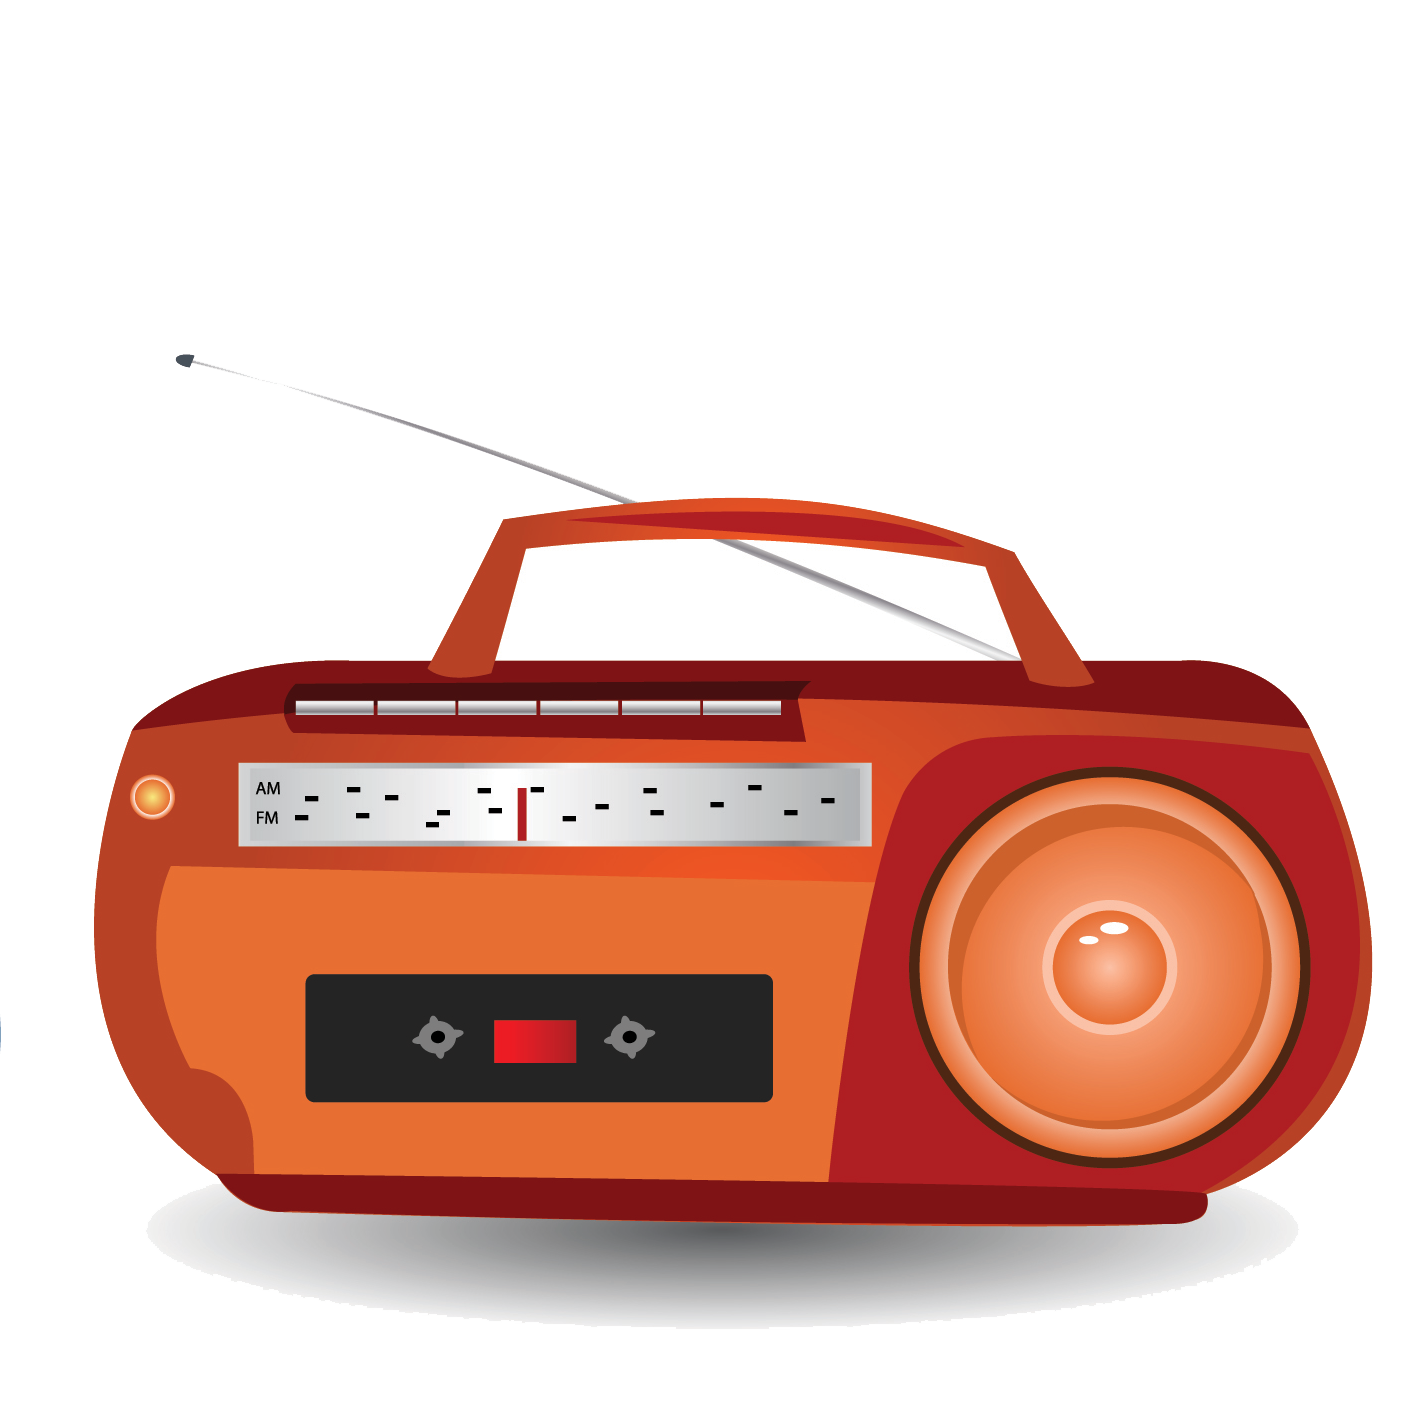 Boombox clipart fm radio, Boombox fm radio Transparent FREE for